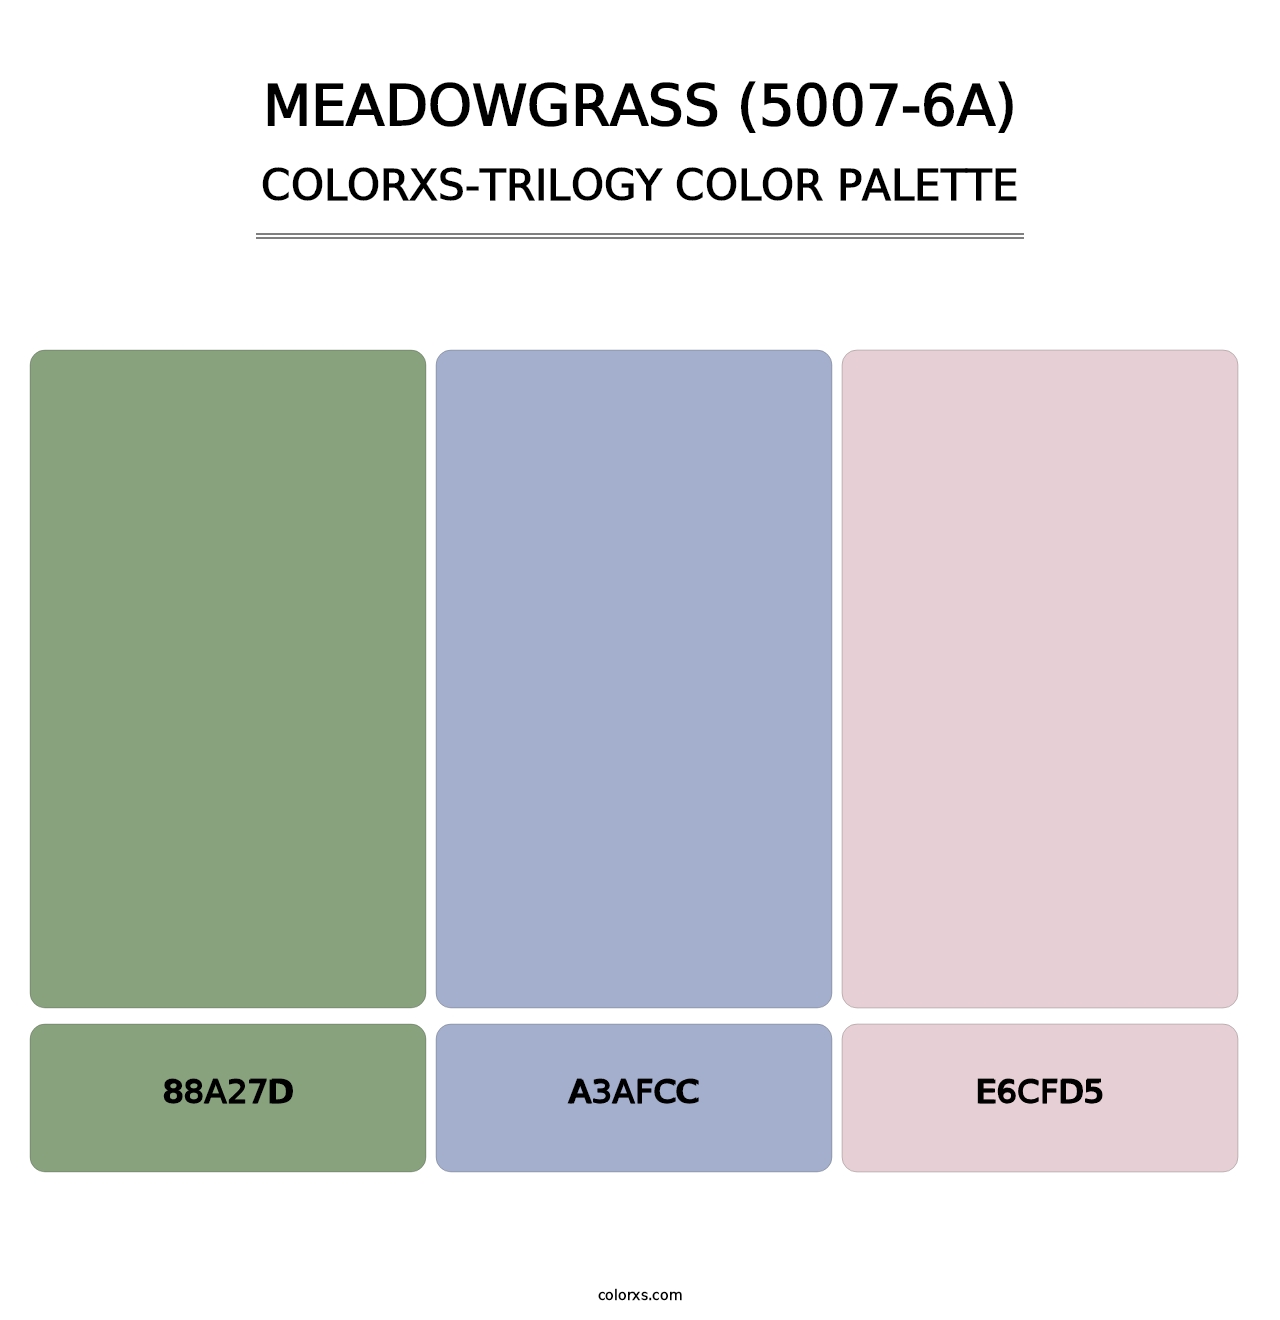 Meadowgrass (5007-6A) - Colorxs Trilogy Palette